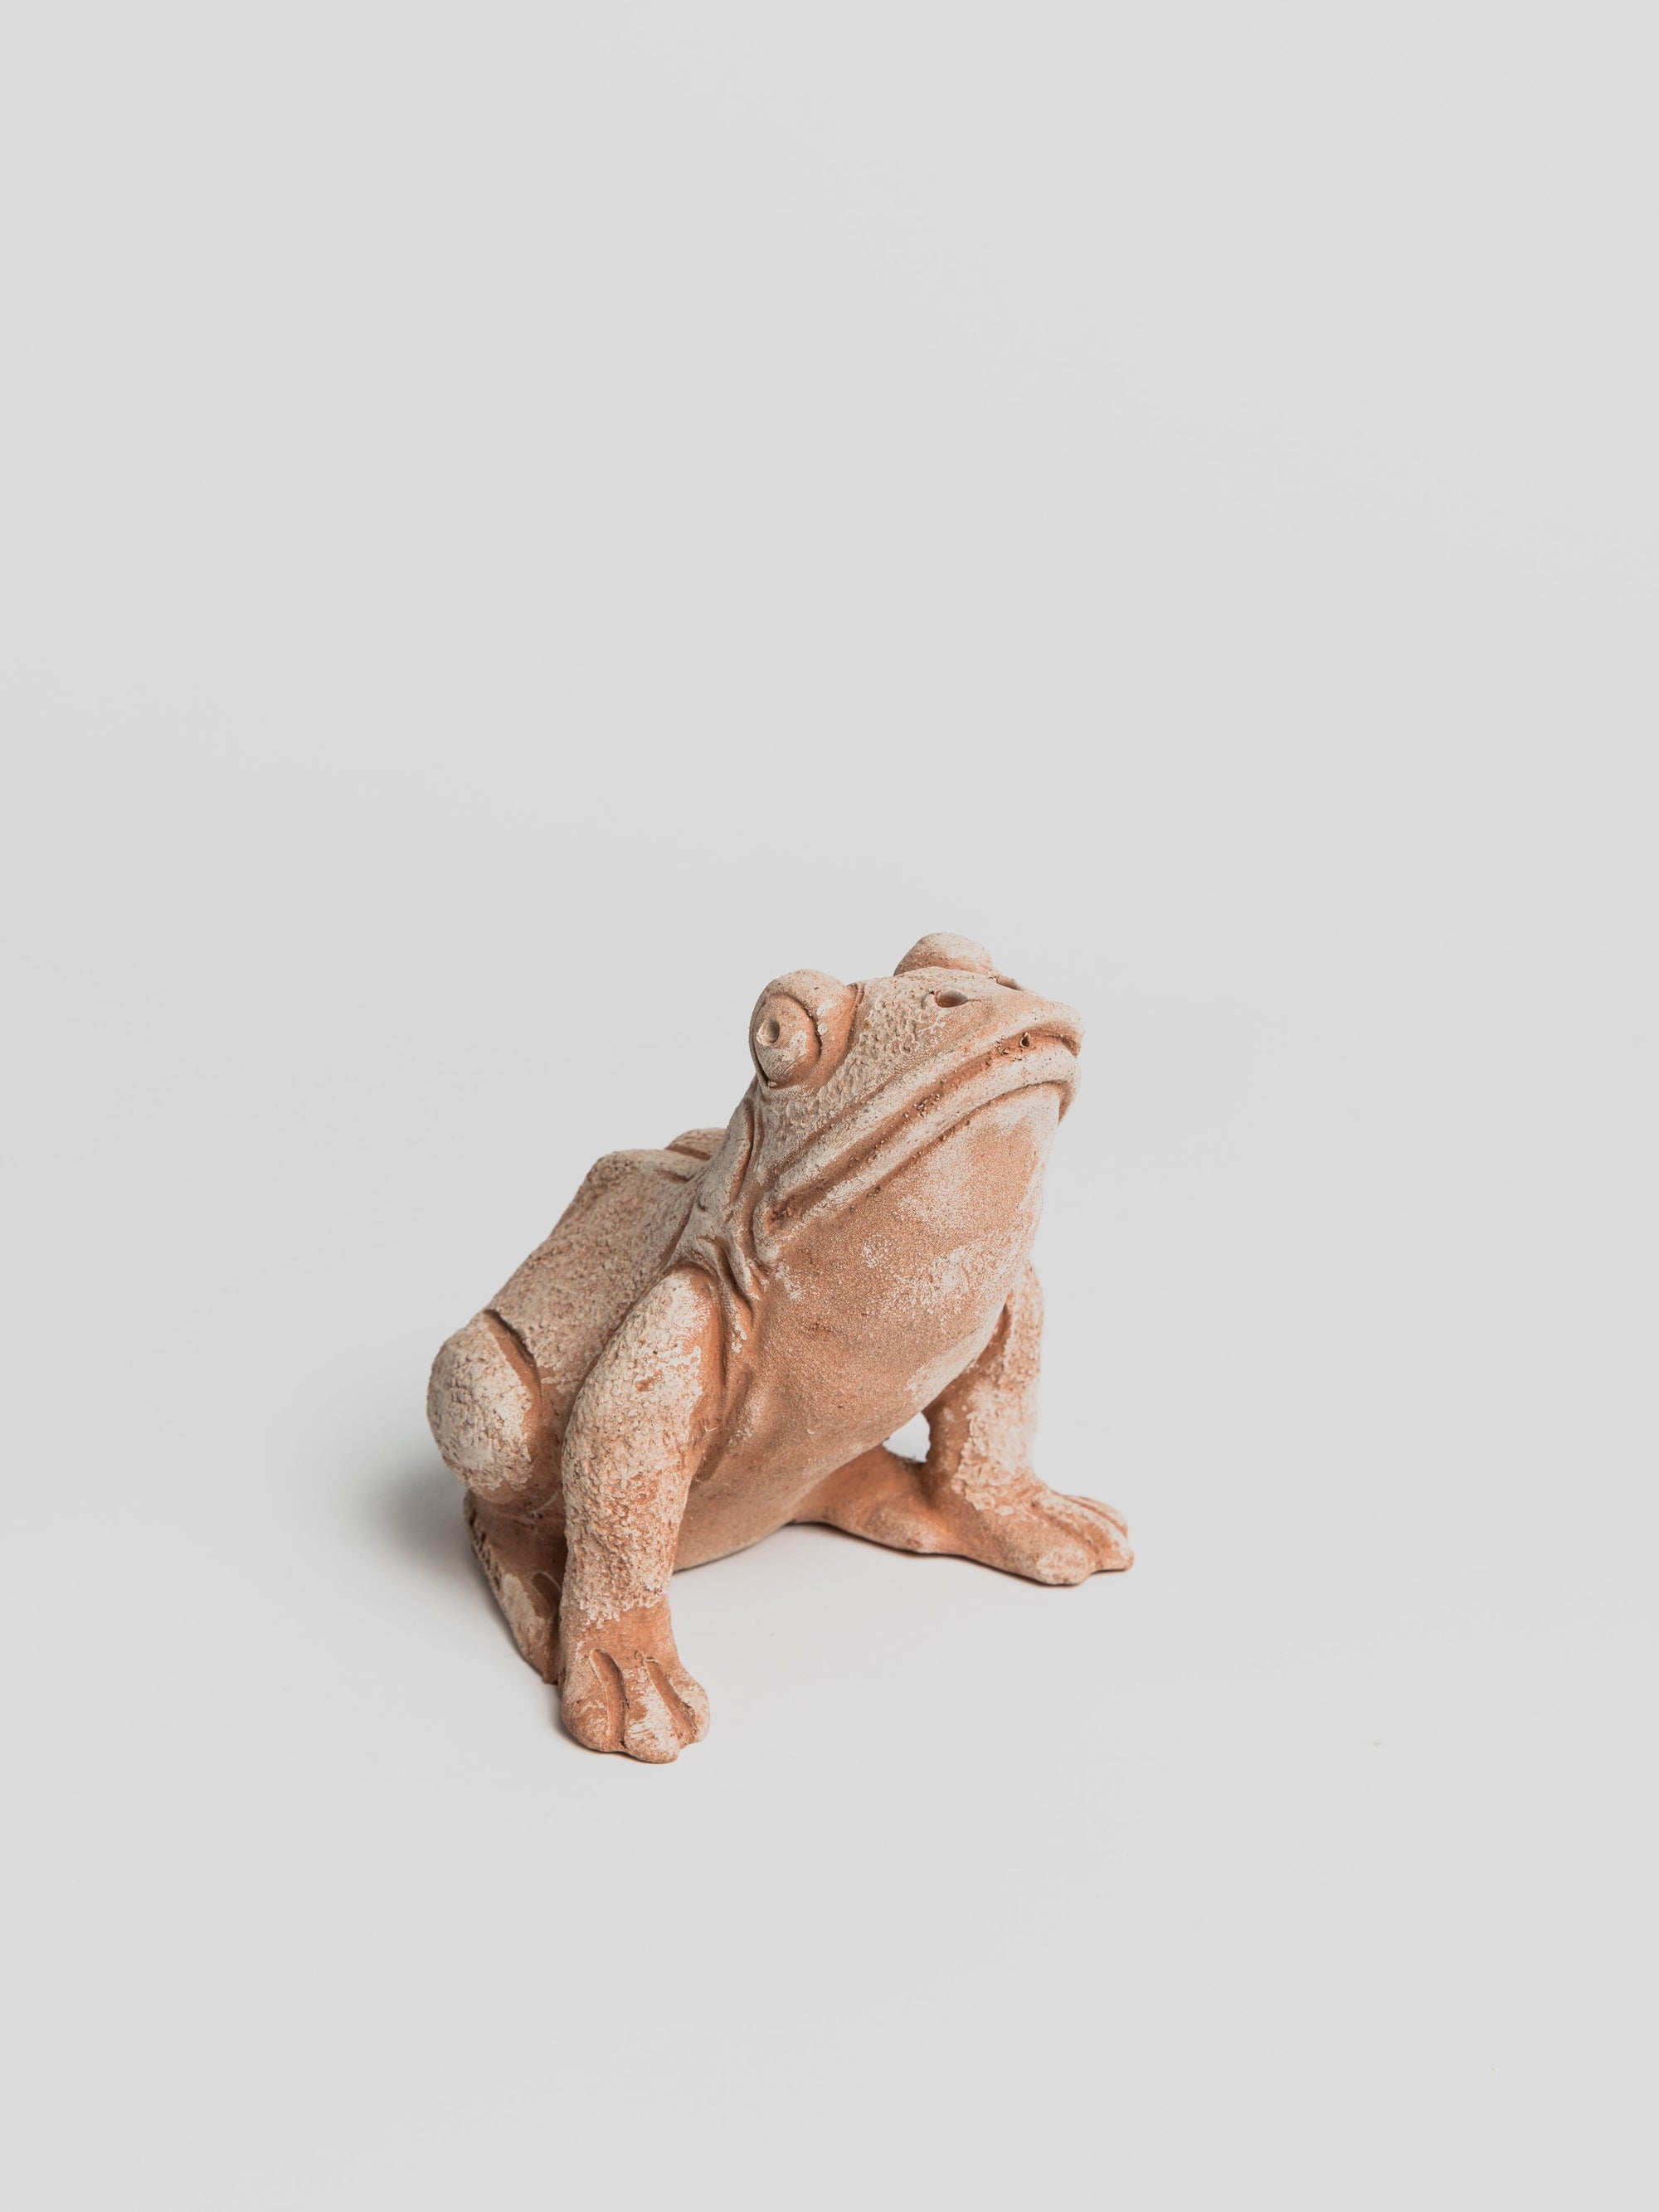 Small Frog Statue - Terracotta Statue M.I.T.A.L 